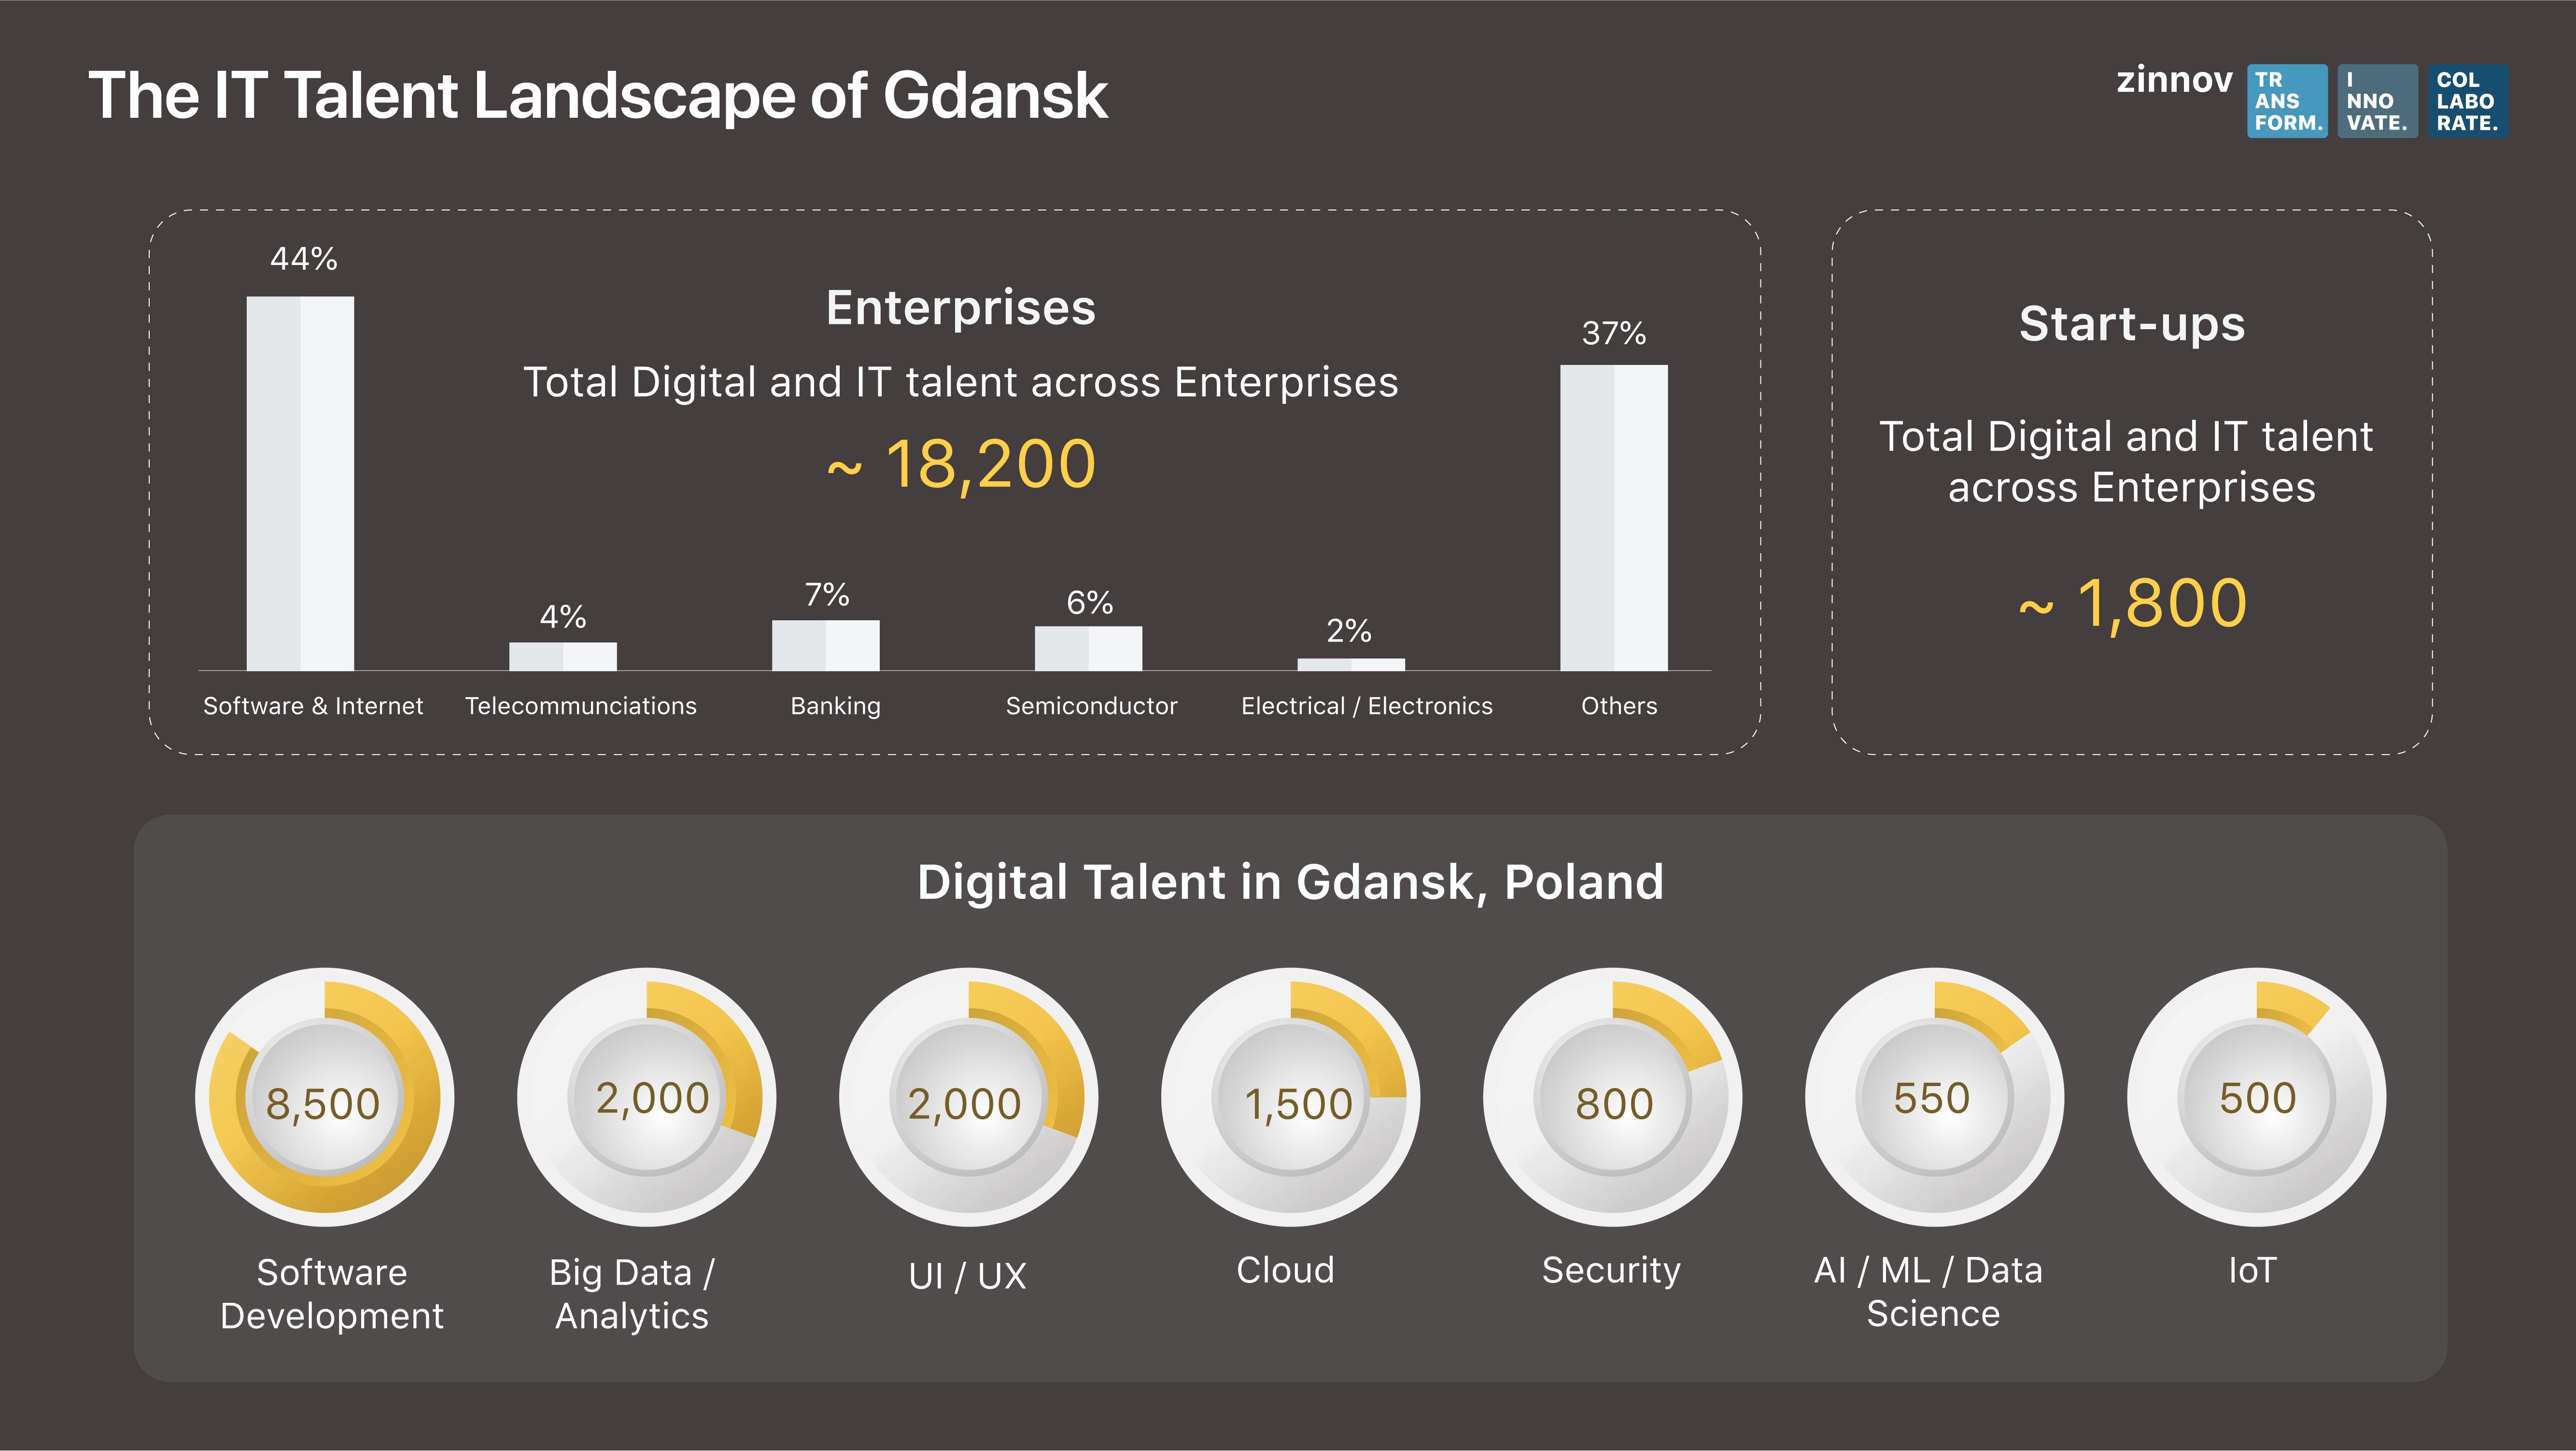 The IT talent landscape of Gdansk